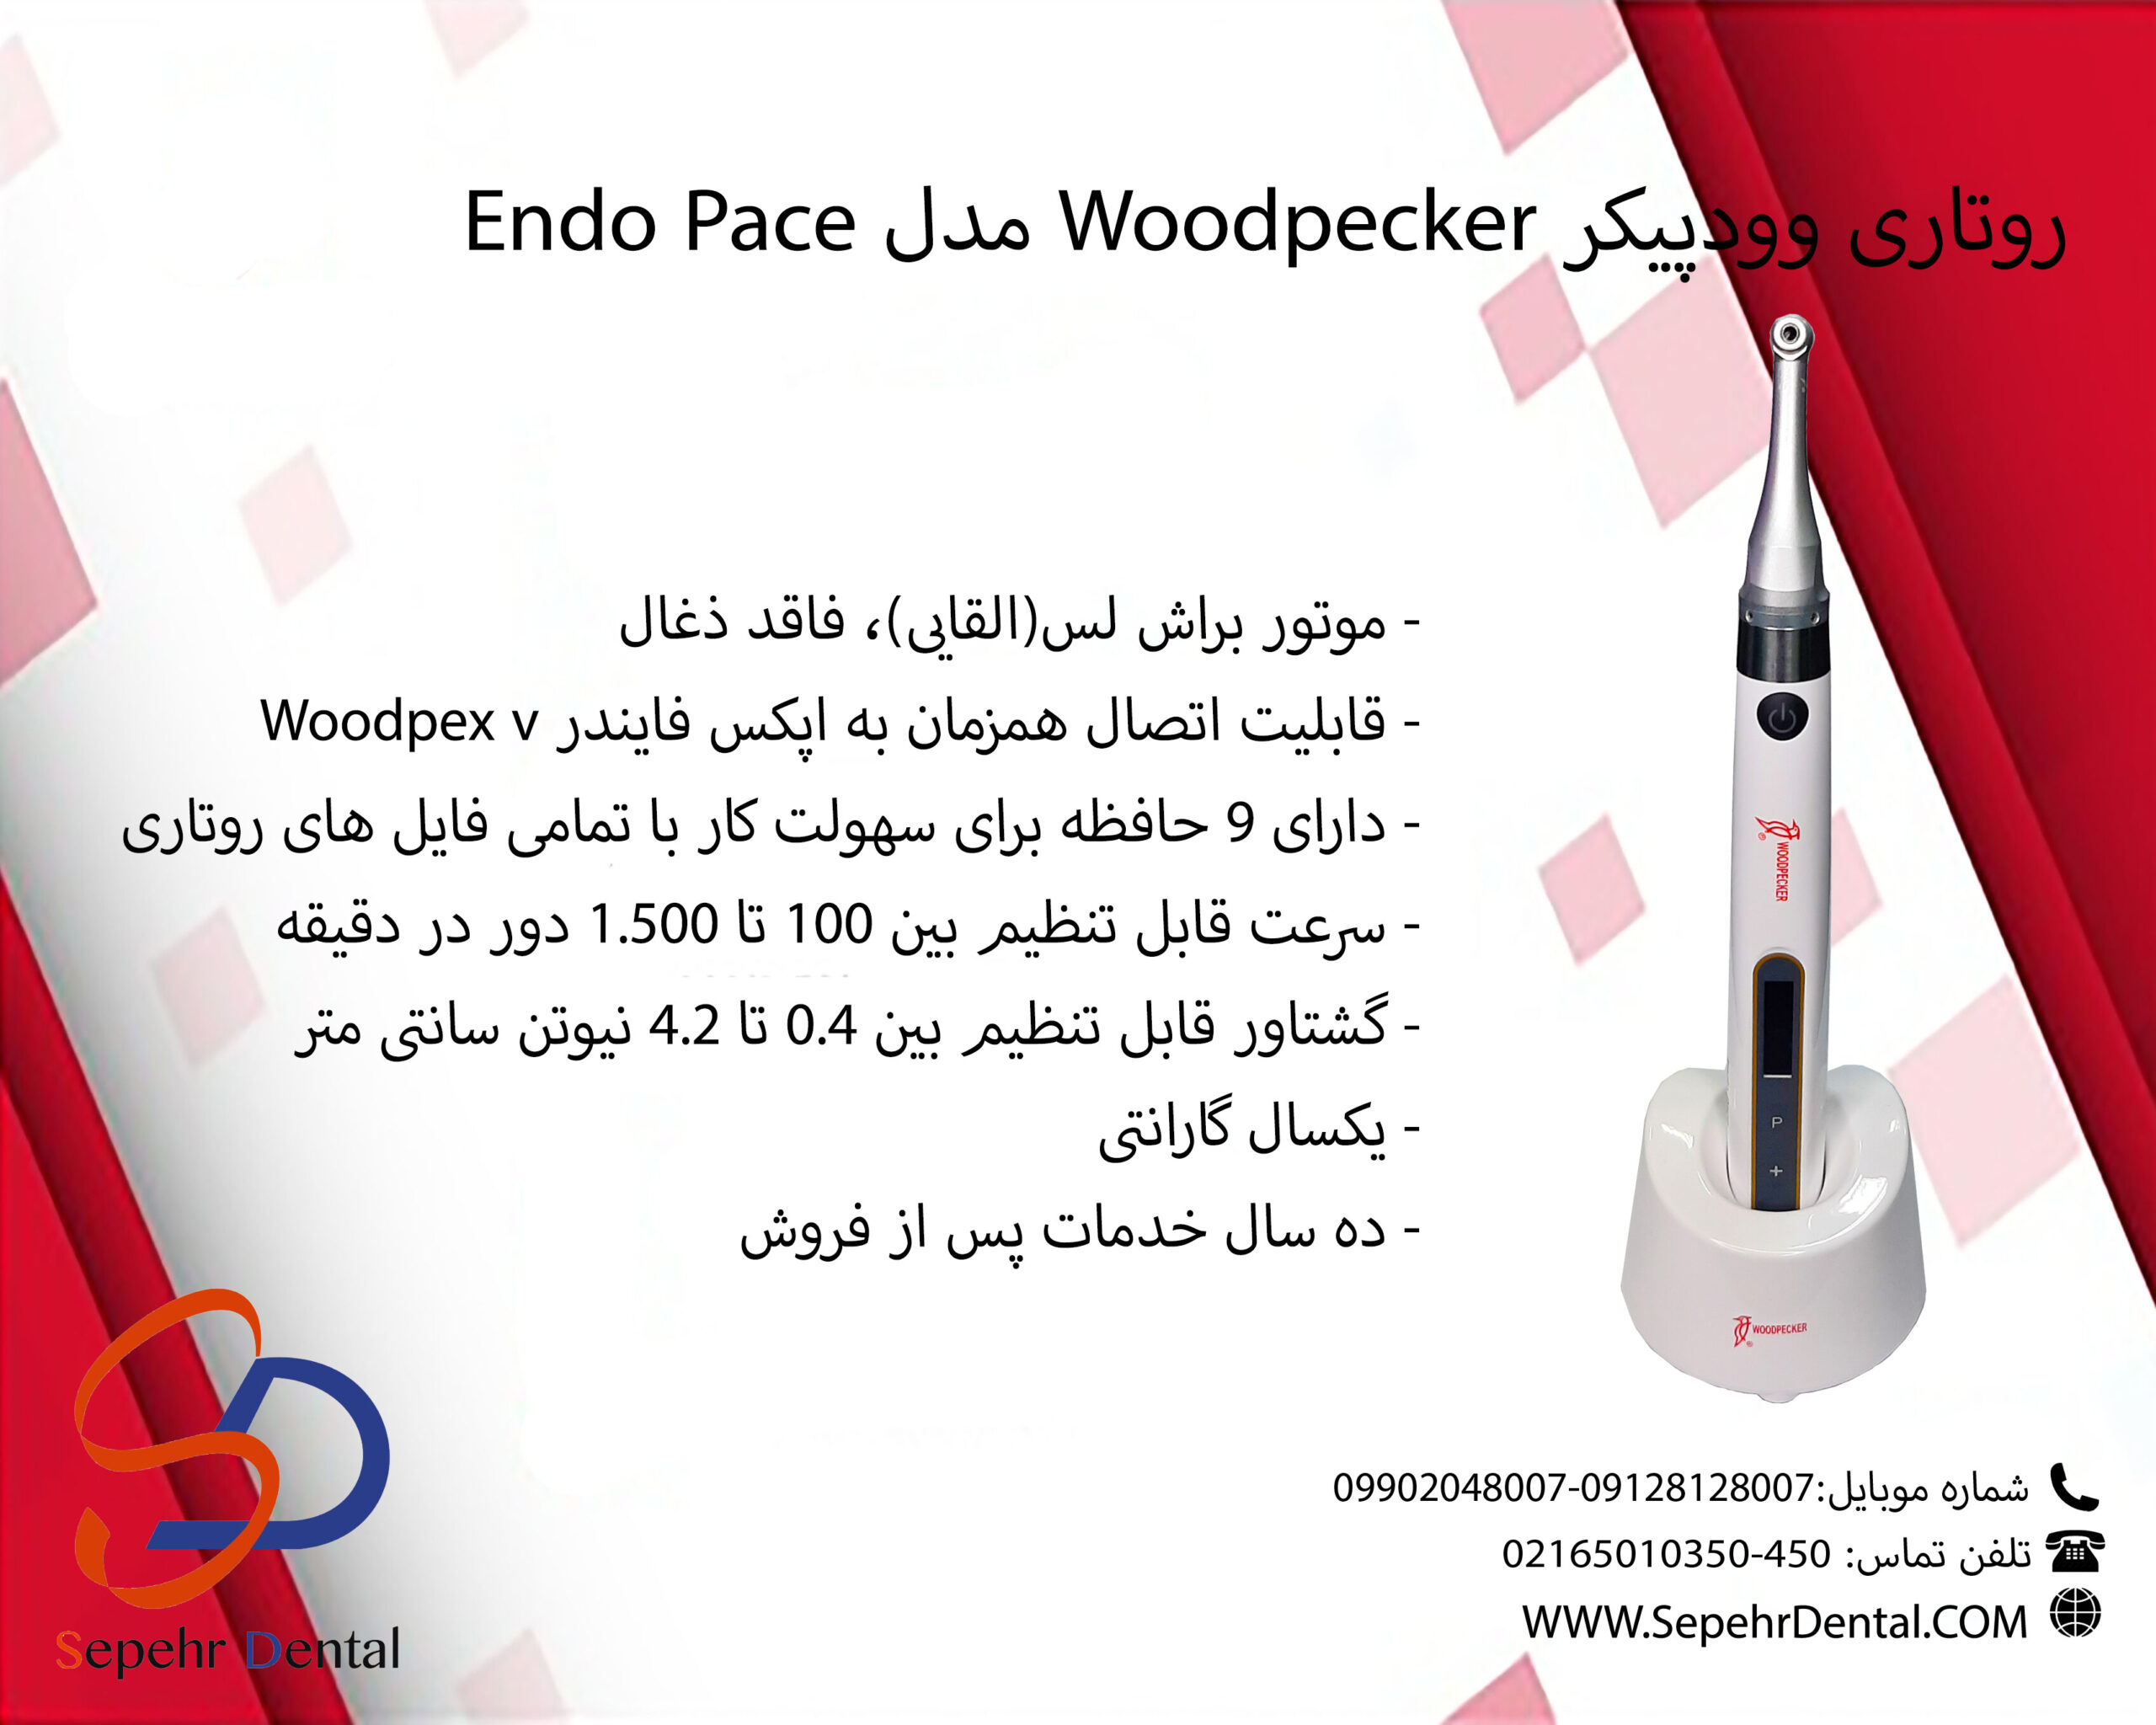 Woodpecker Endo Pace